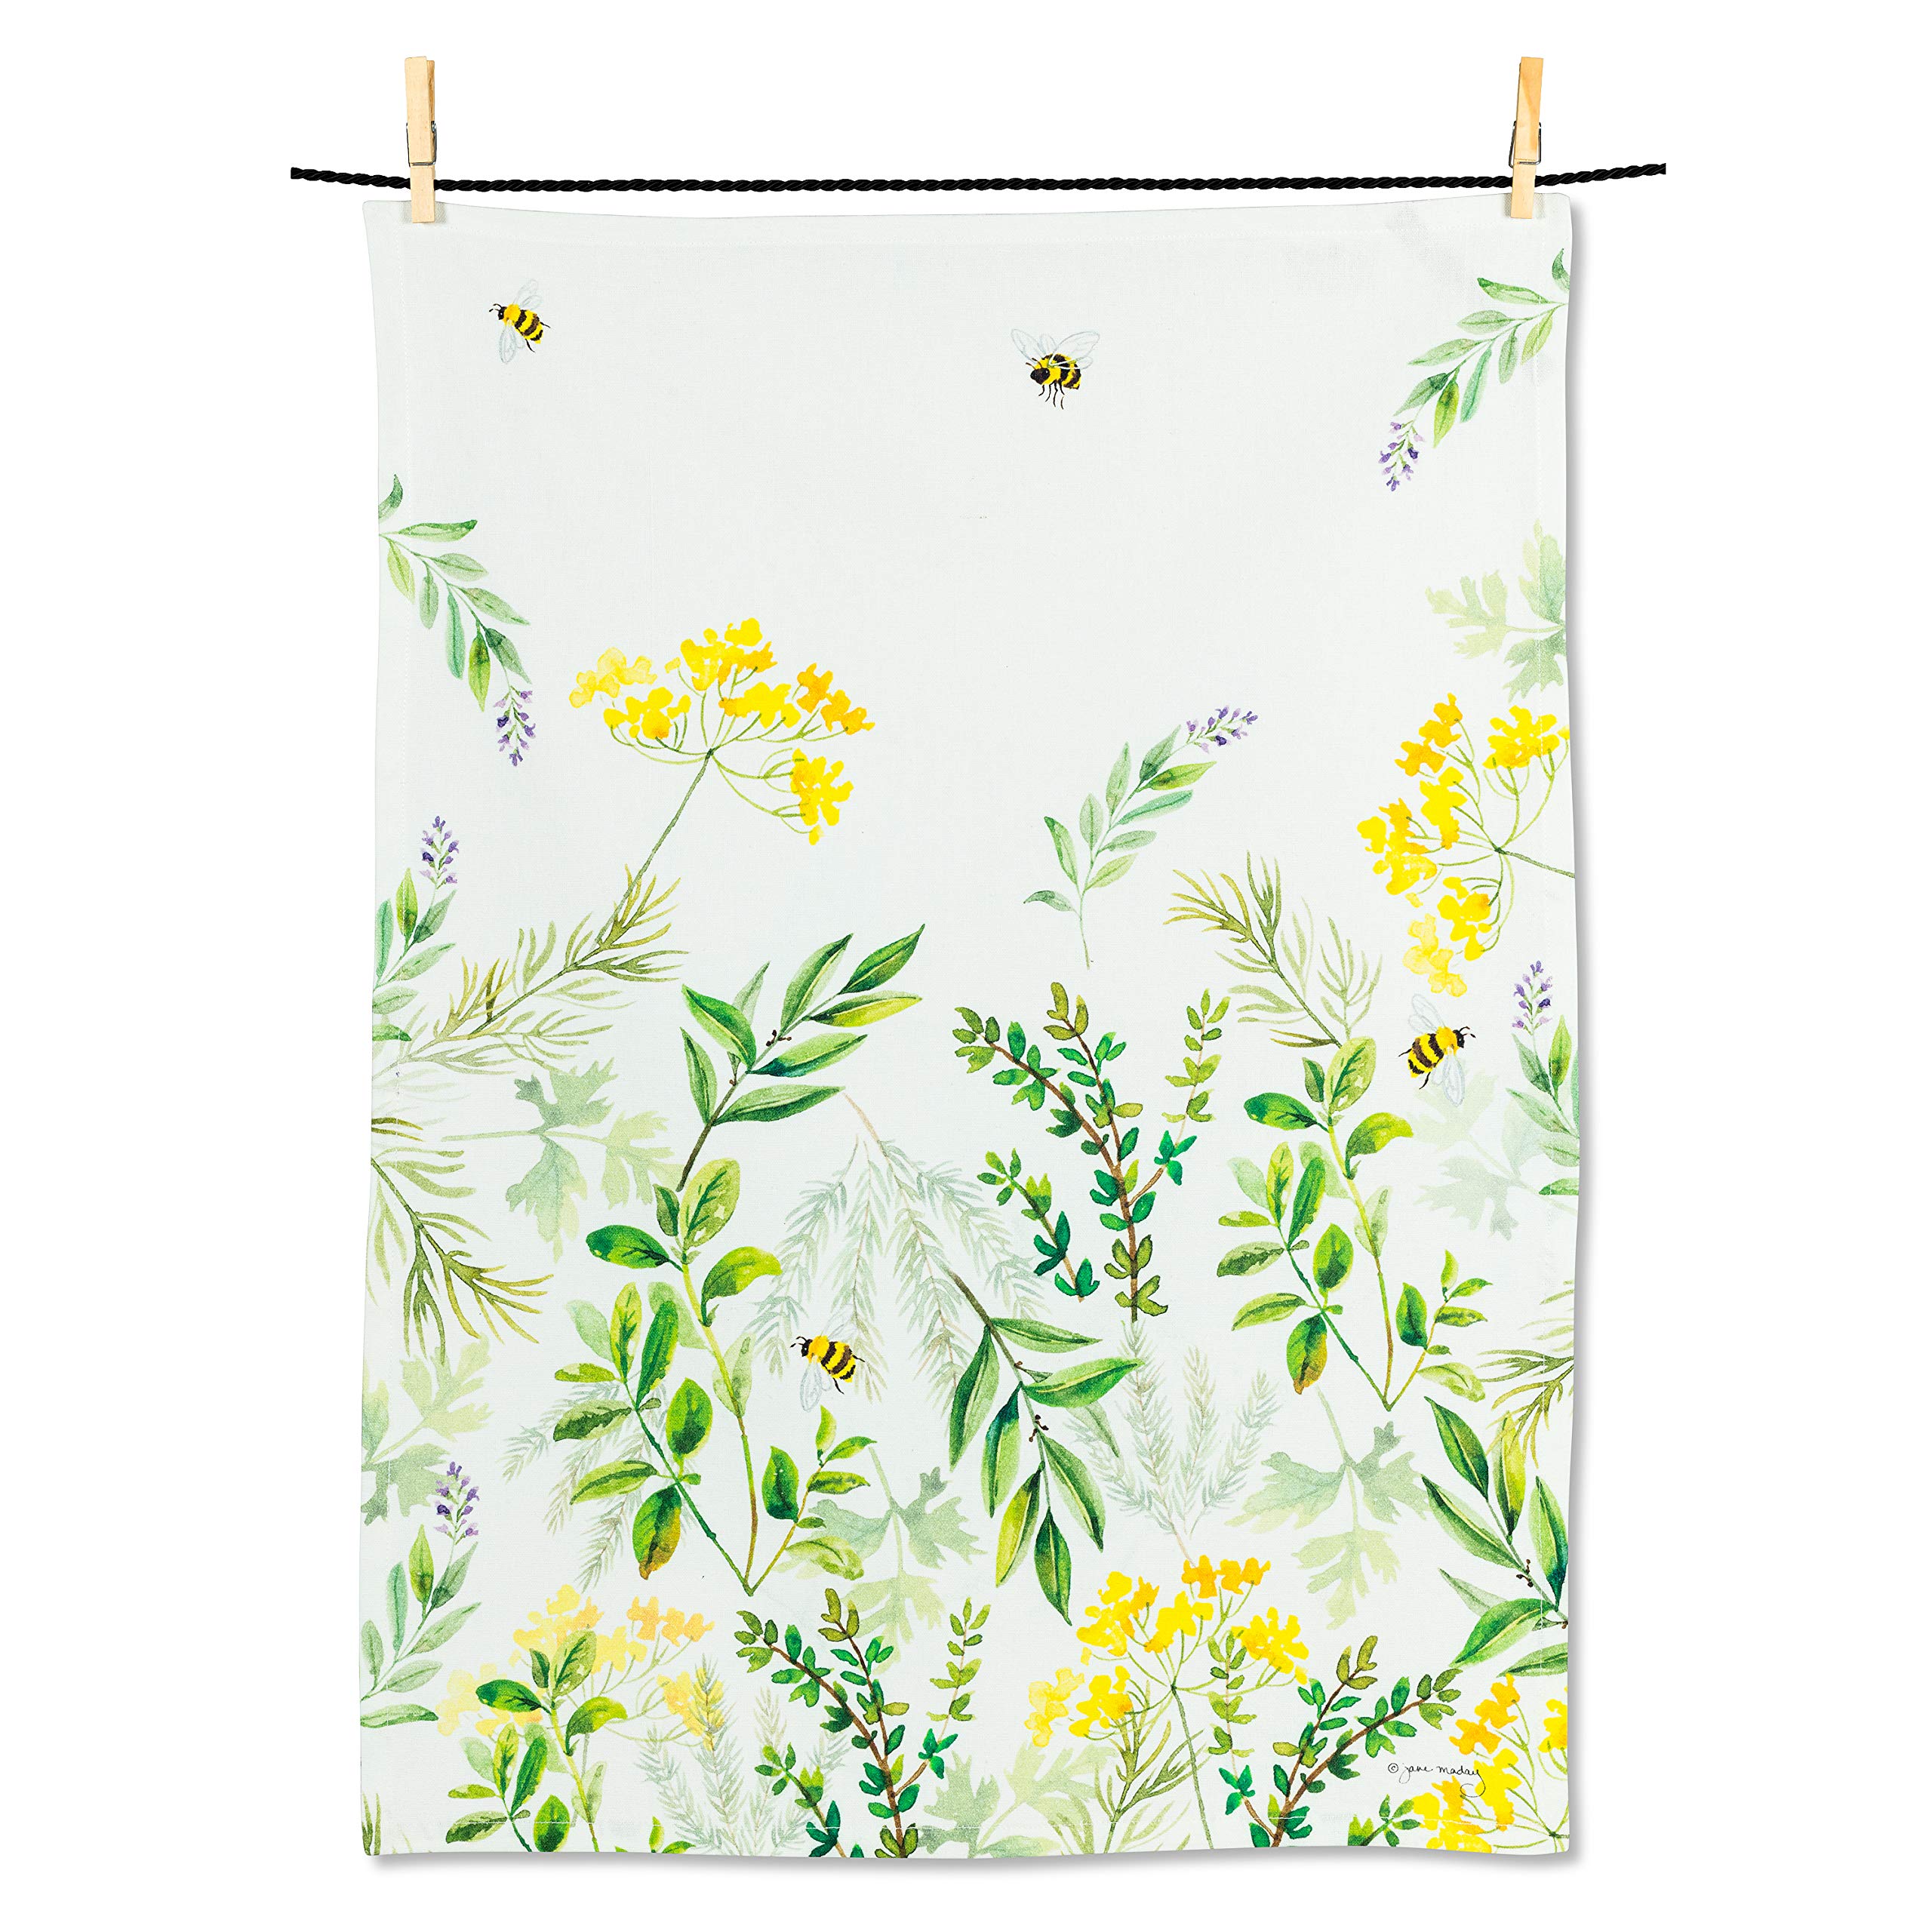 Abbott Collection 56-KT-JM-02 Herb Garden Tea Towel-20x28 L, 1 EA, White/Green